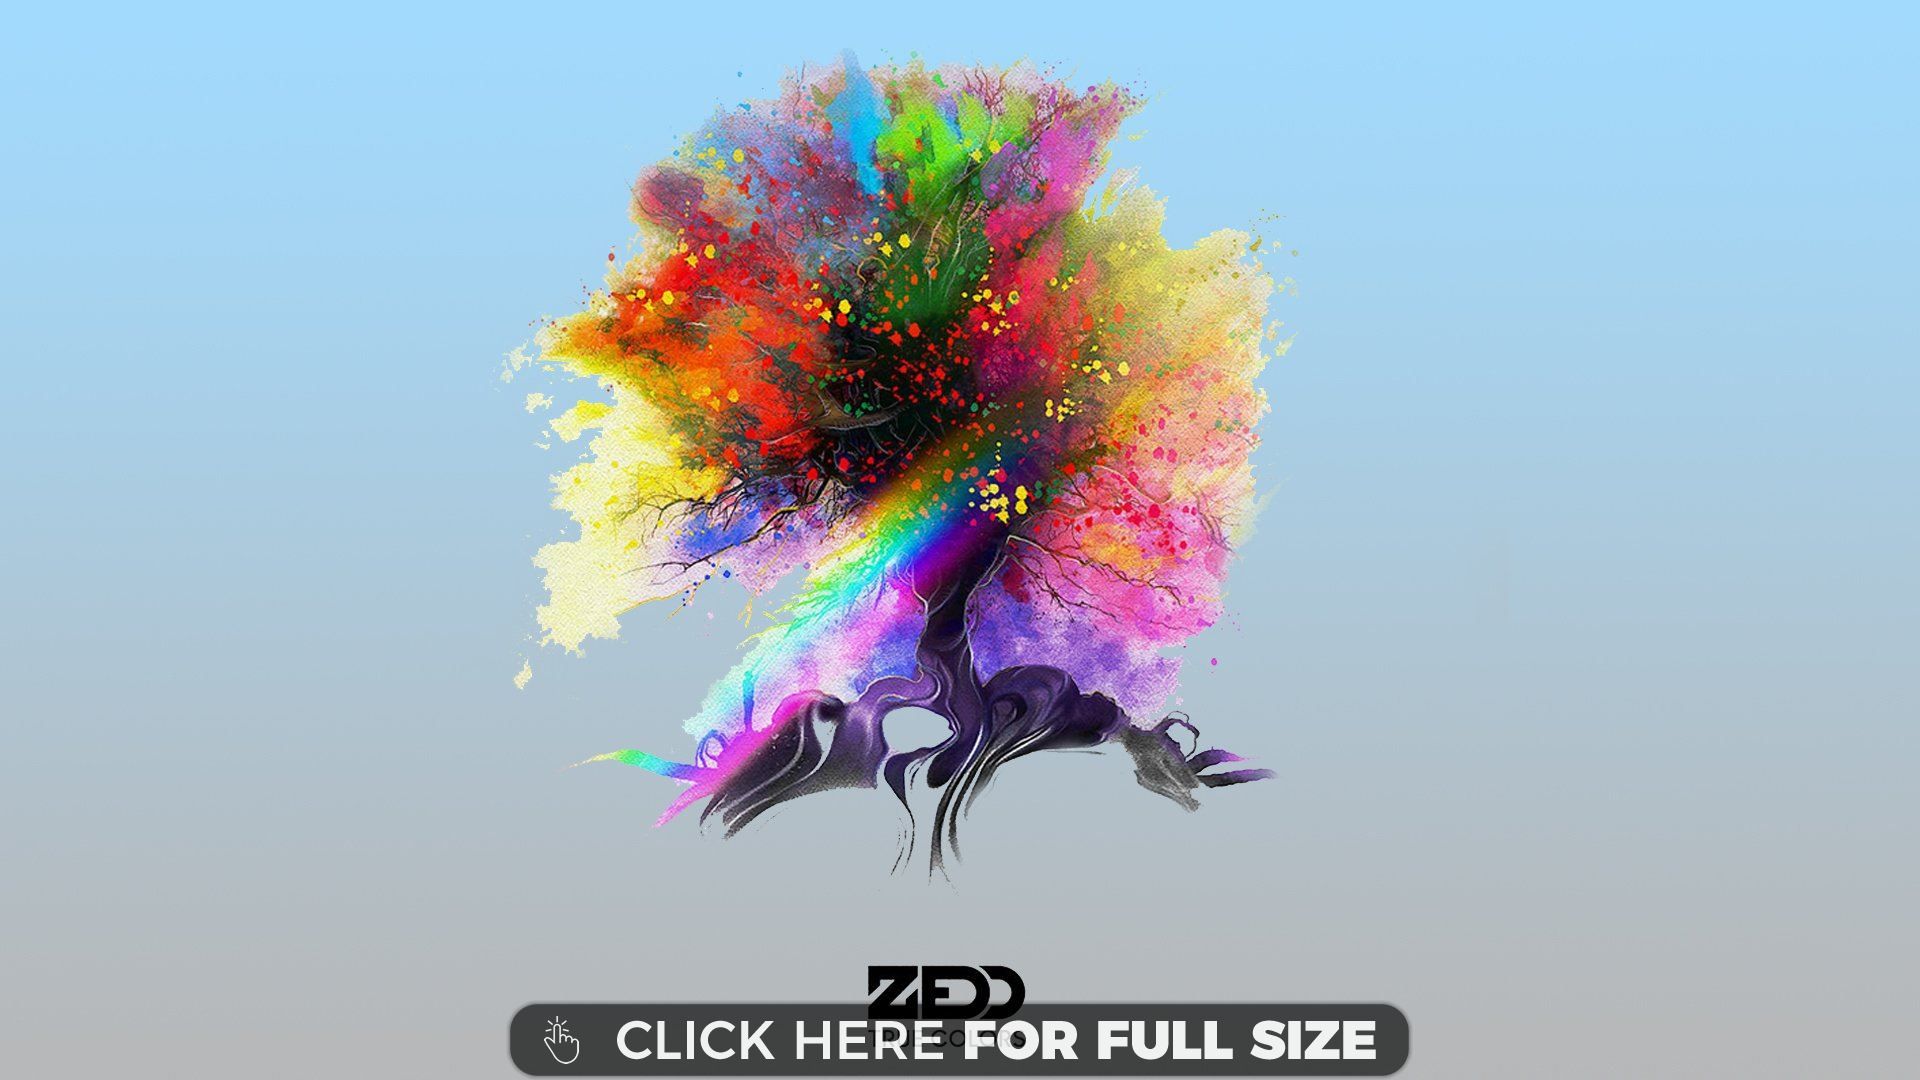 My Best Attempt At A Zedd True Colors Wallpaper For Your Desktop